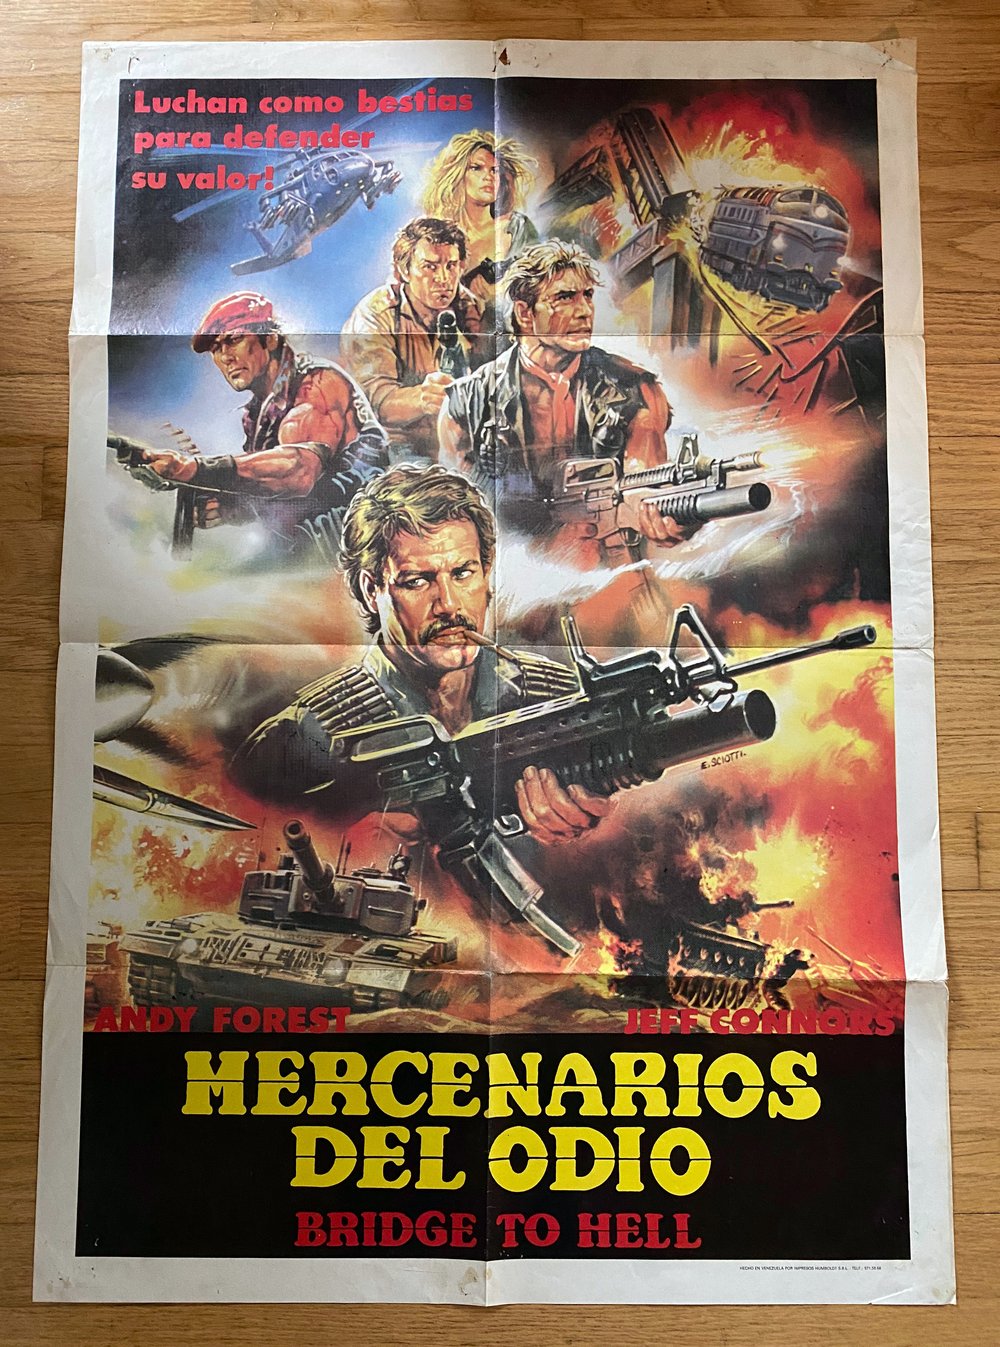 1986 MERCENARIOS DEL ODIO AKA BRIDGE TO HELL Original Venezuelan One Sheet Movie Poster